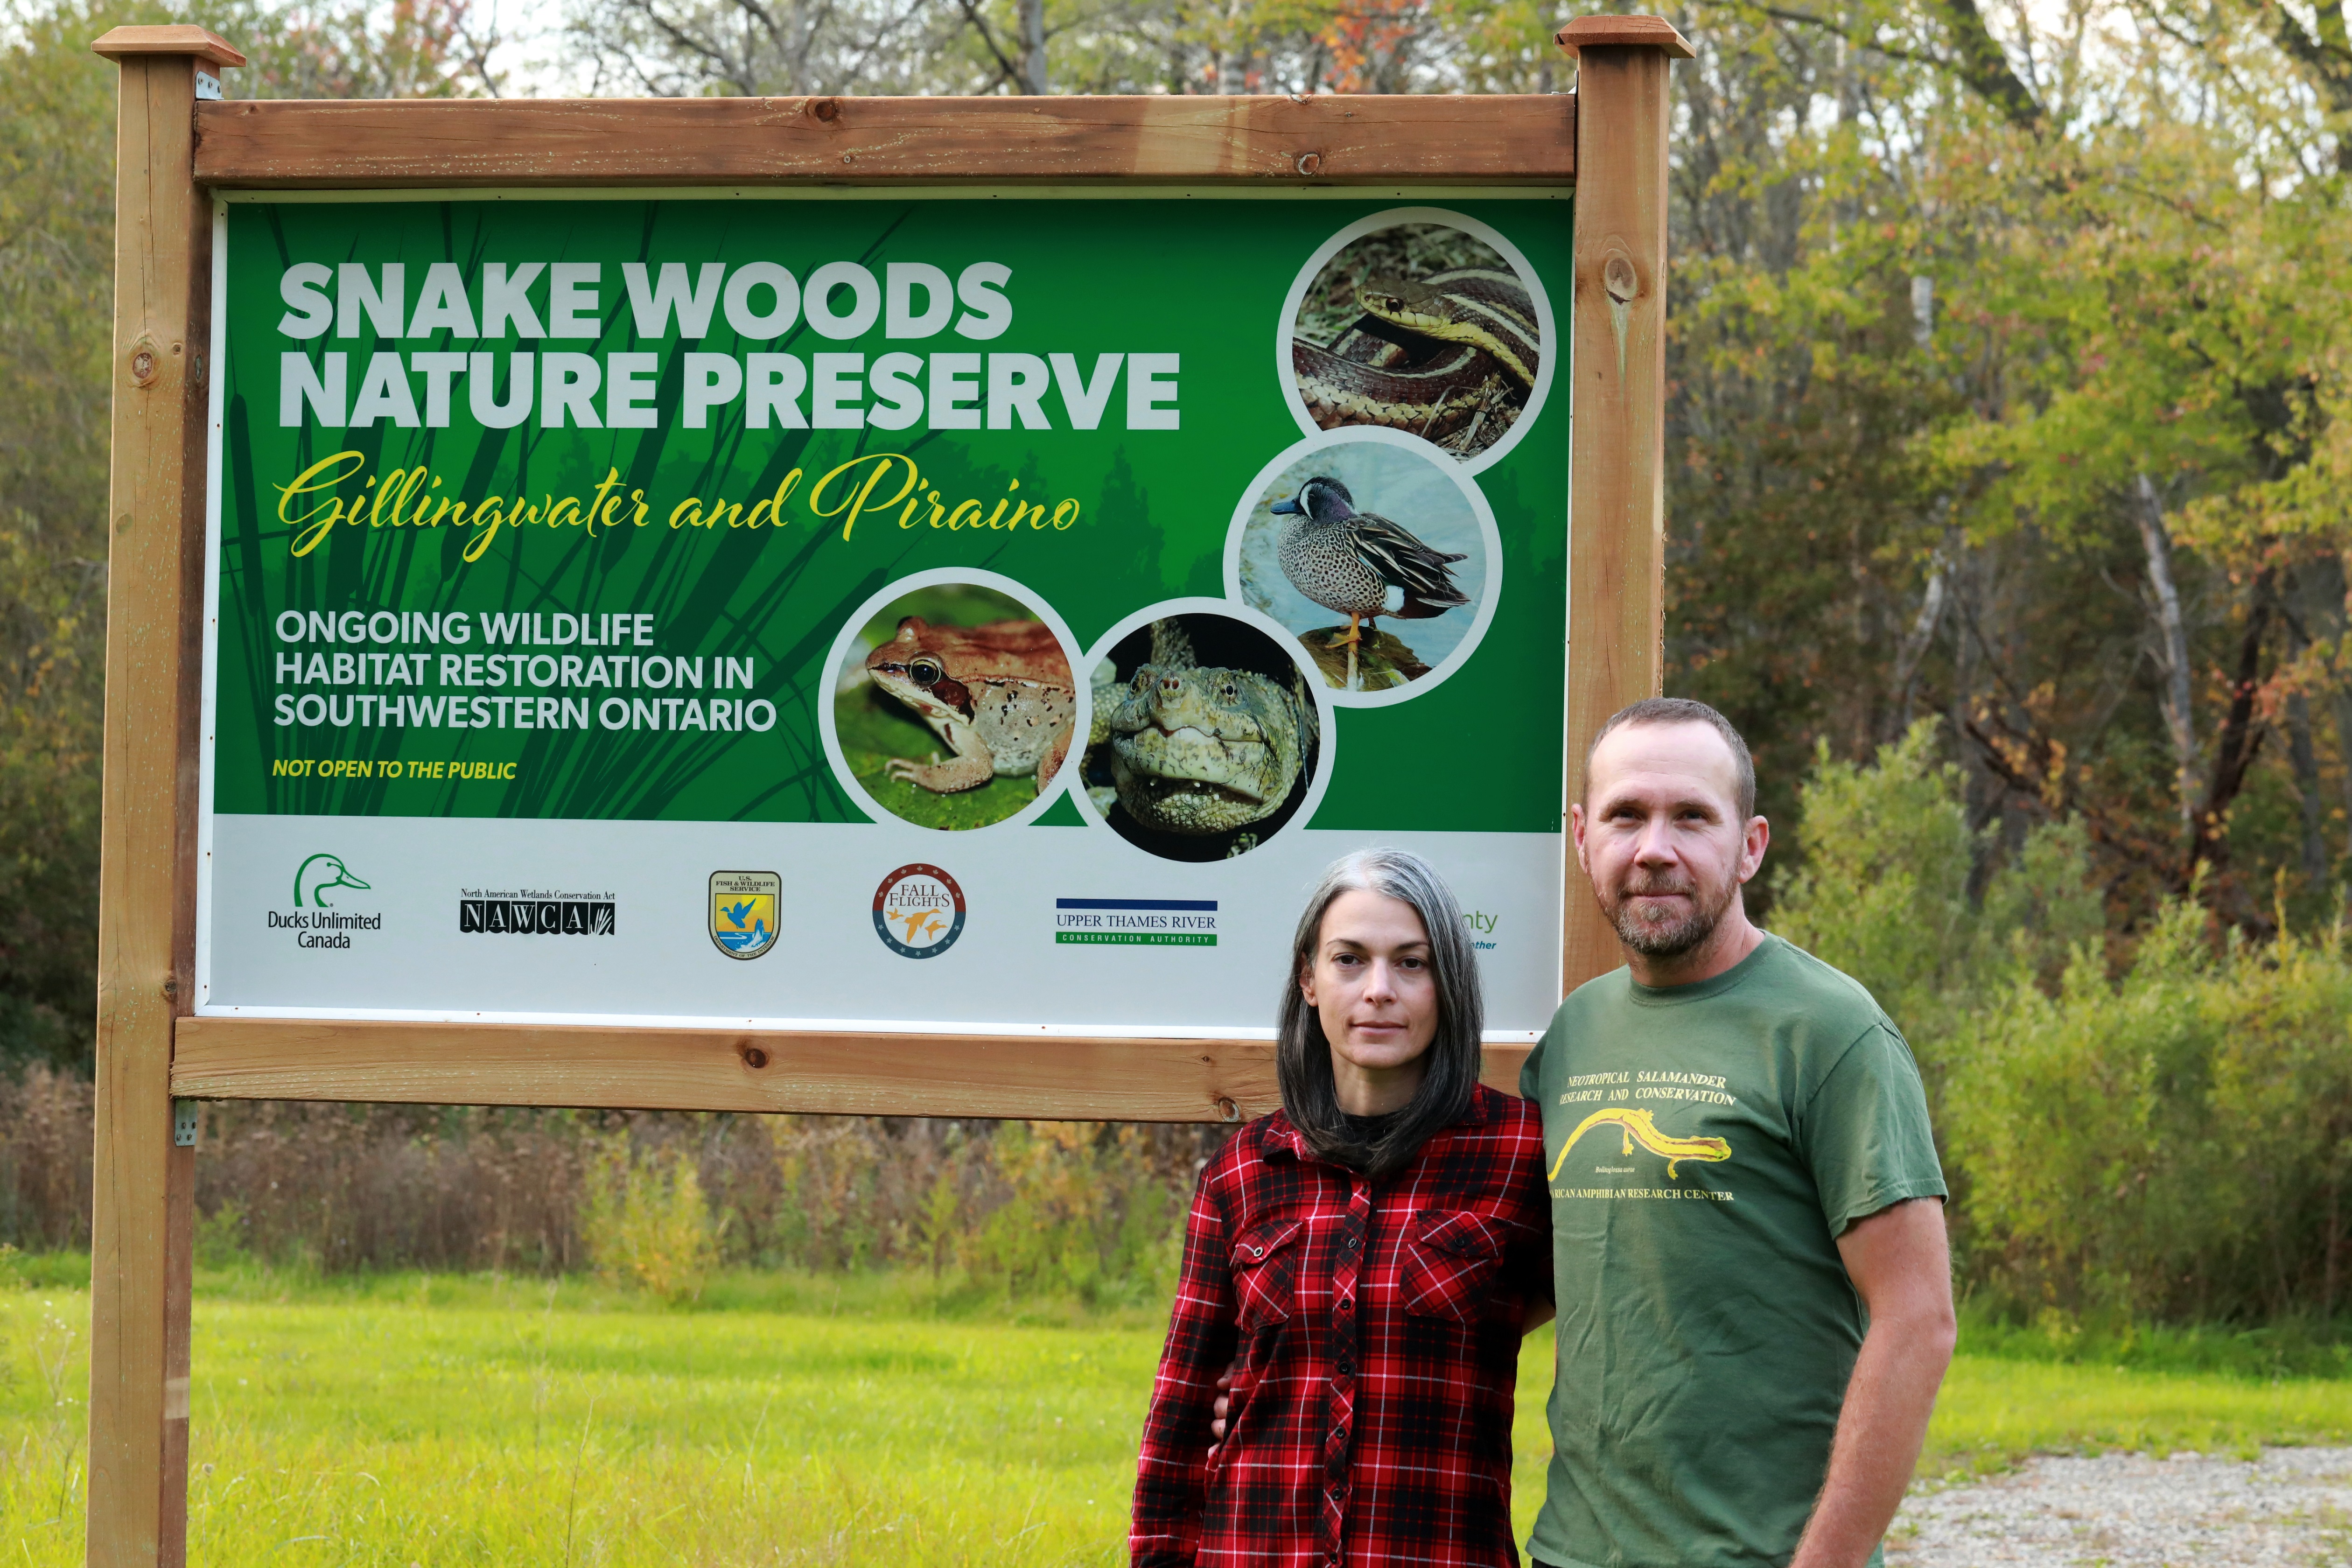 Award winners next to snake woods nature preserve billboard